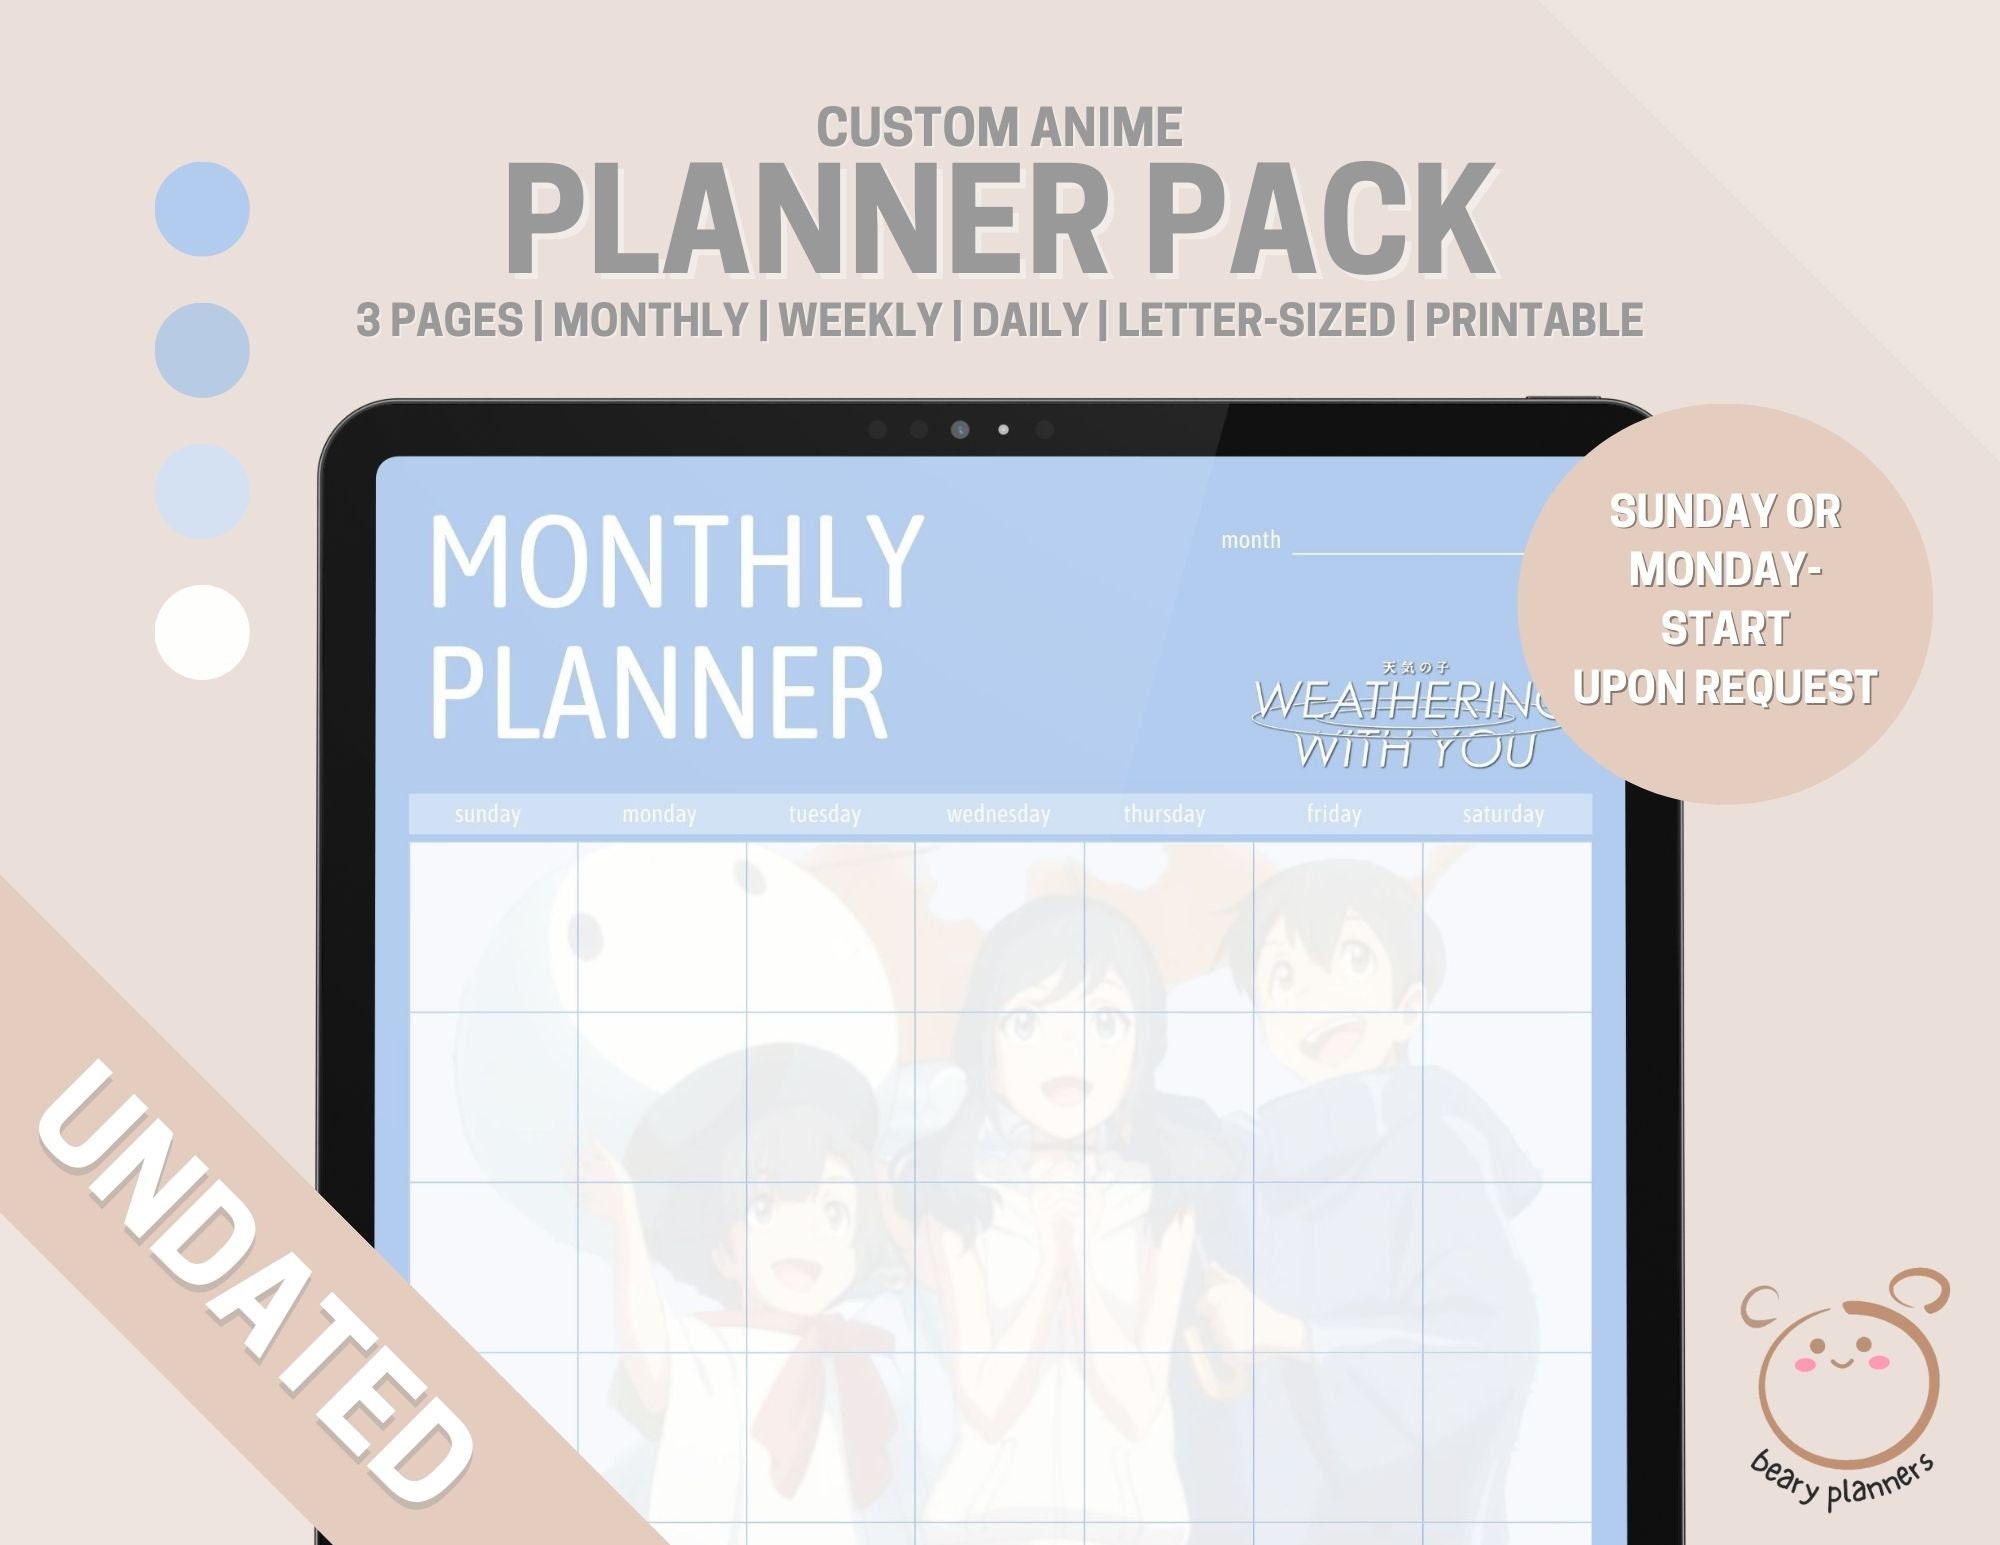 Haikyuu anime minimalist weekly planner notepad school office stationary  part 1 | Shopee Philippines